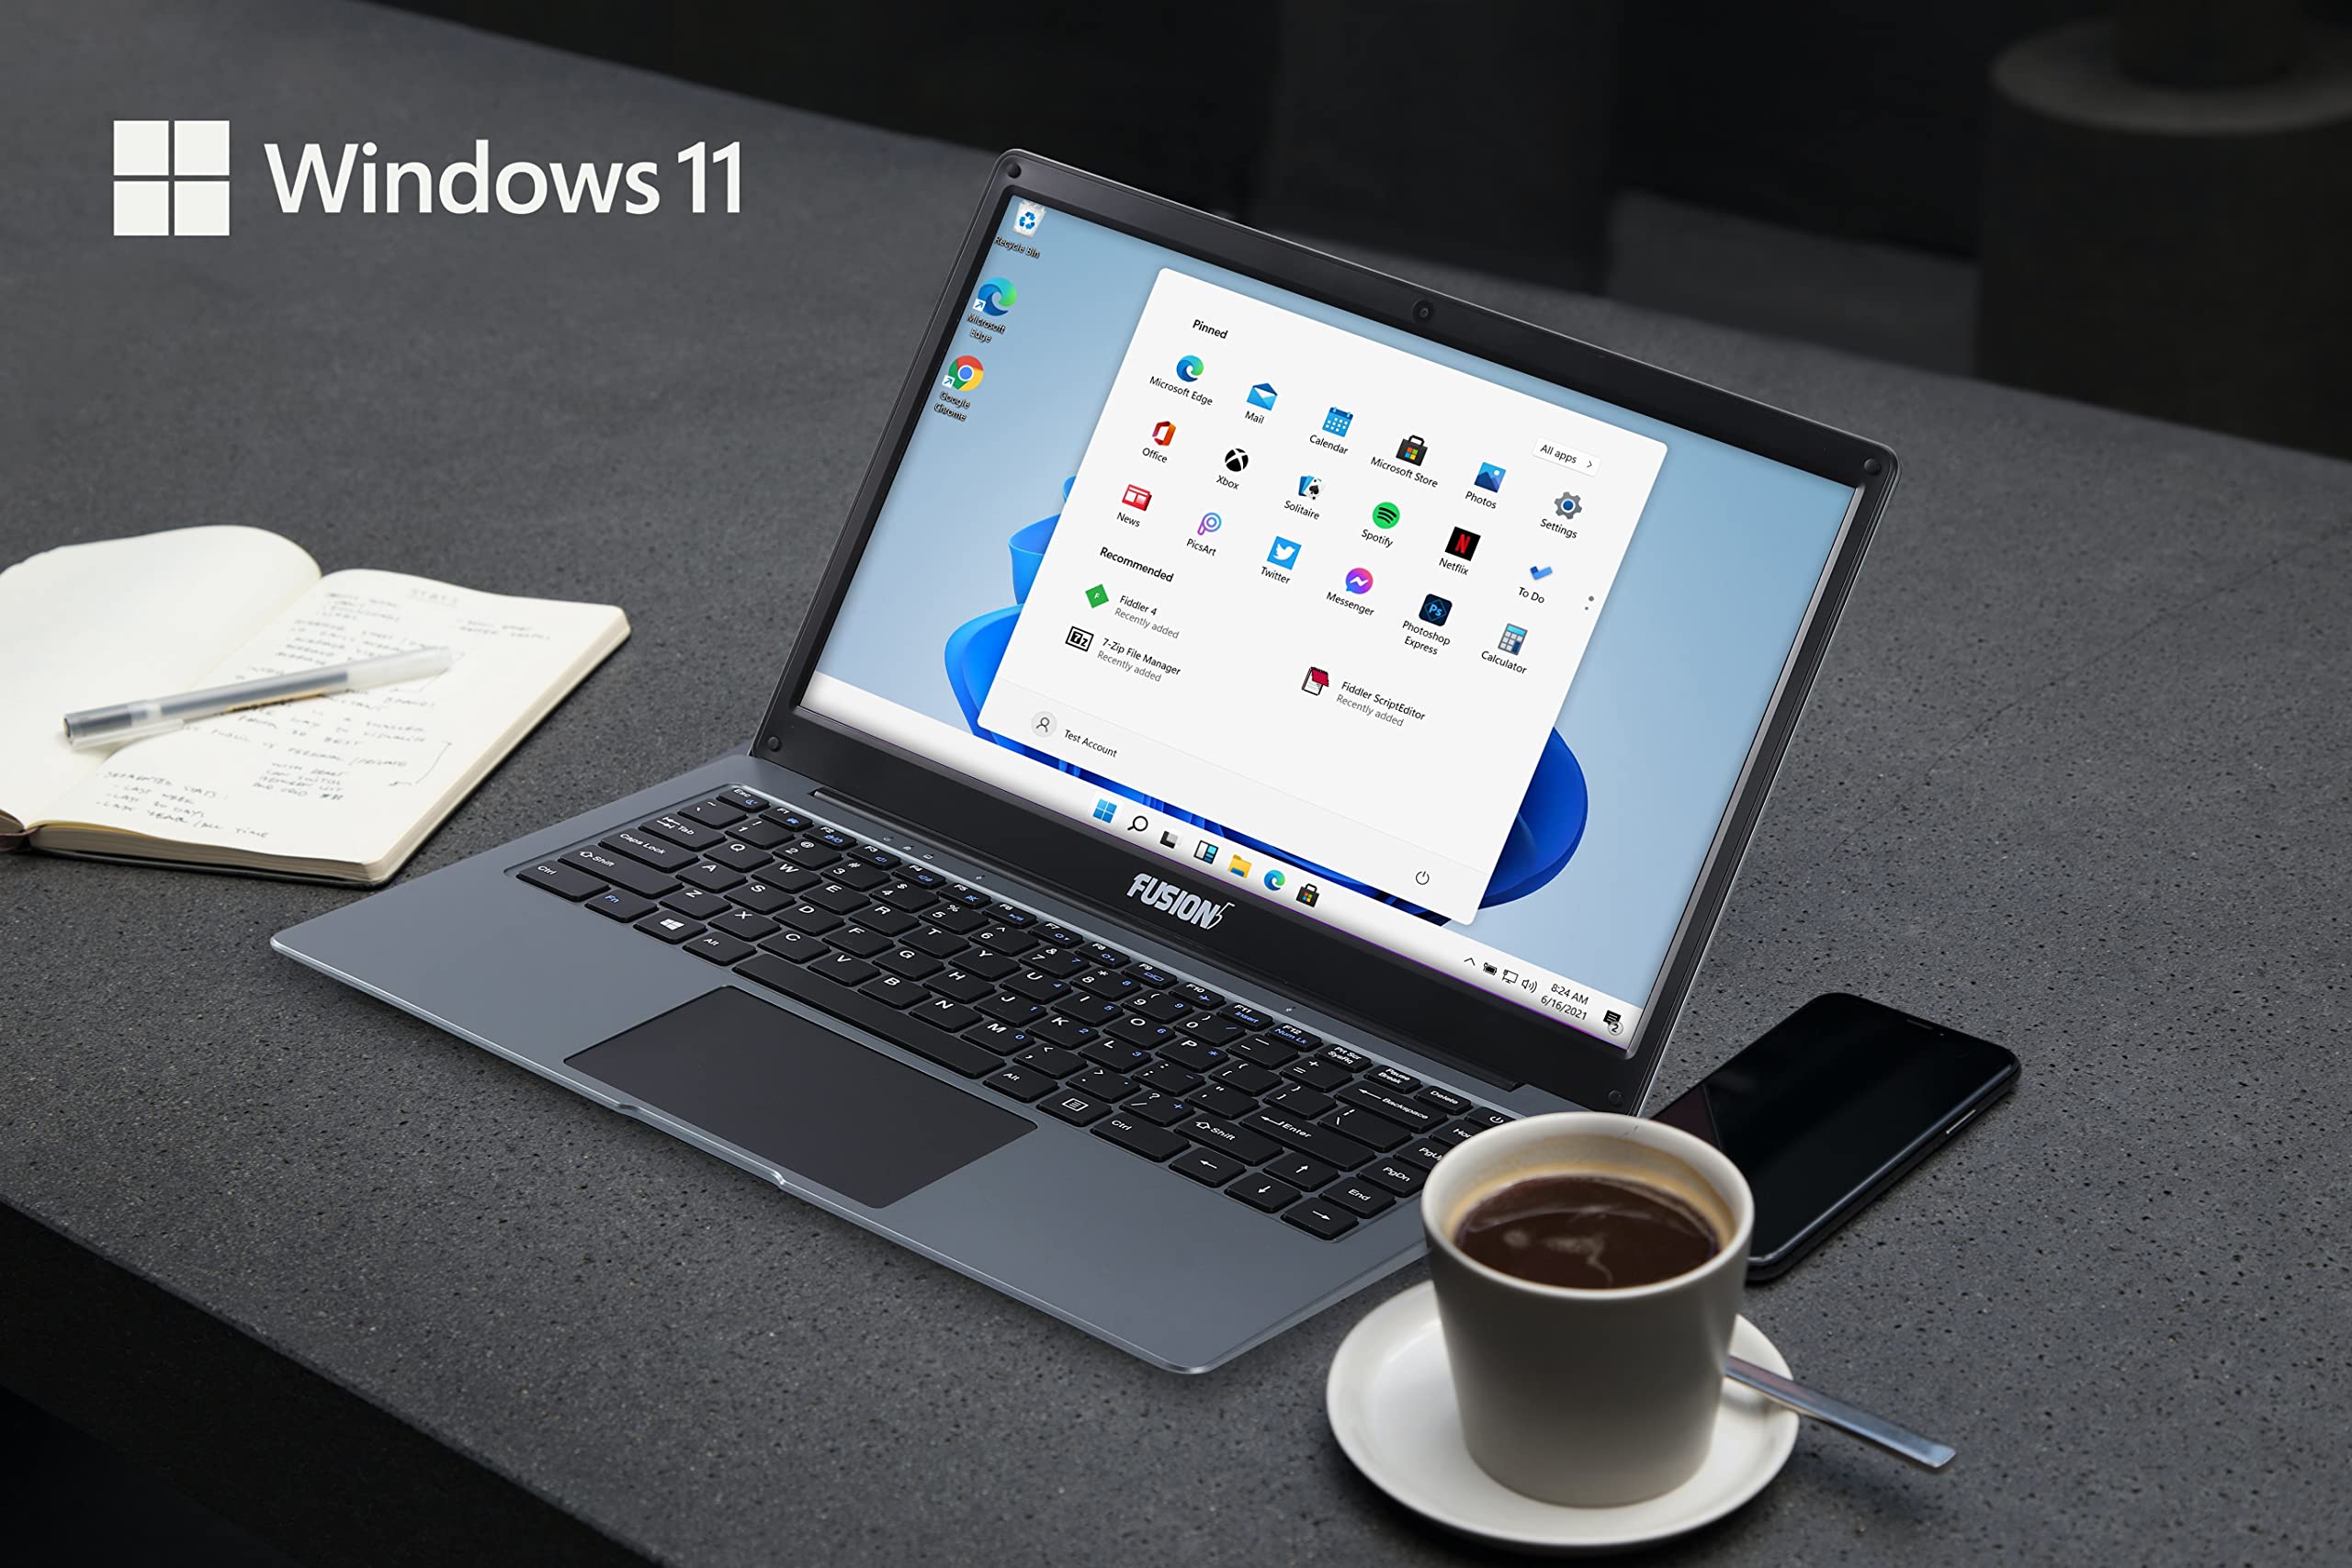 Fusion5 14.1 Inch A90B+ Pro 128GB Windows 10 Laptop - Windows 11 Compatible, 4GB RAM, 128GB Storage, Full HD IPS, Bluetooth, Dual Band WiFi Laptop, USB 3.0, Expandable Storage (128GB)